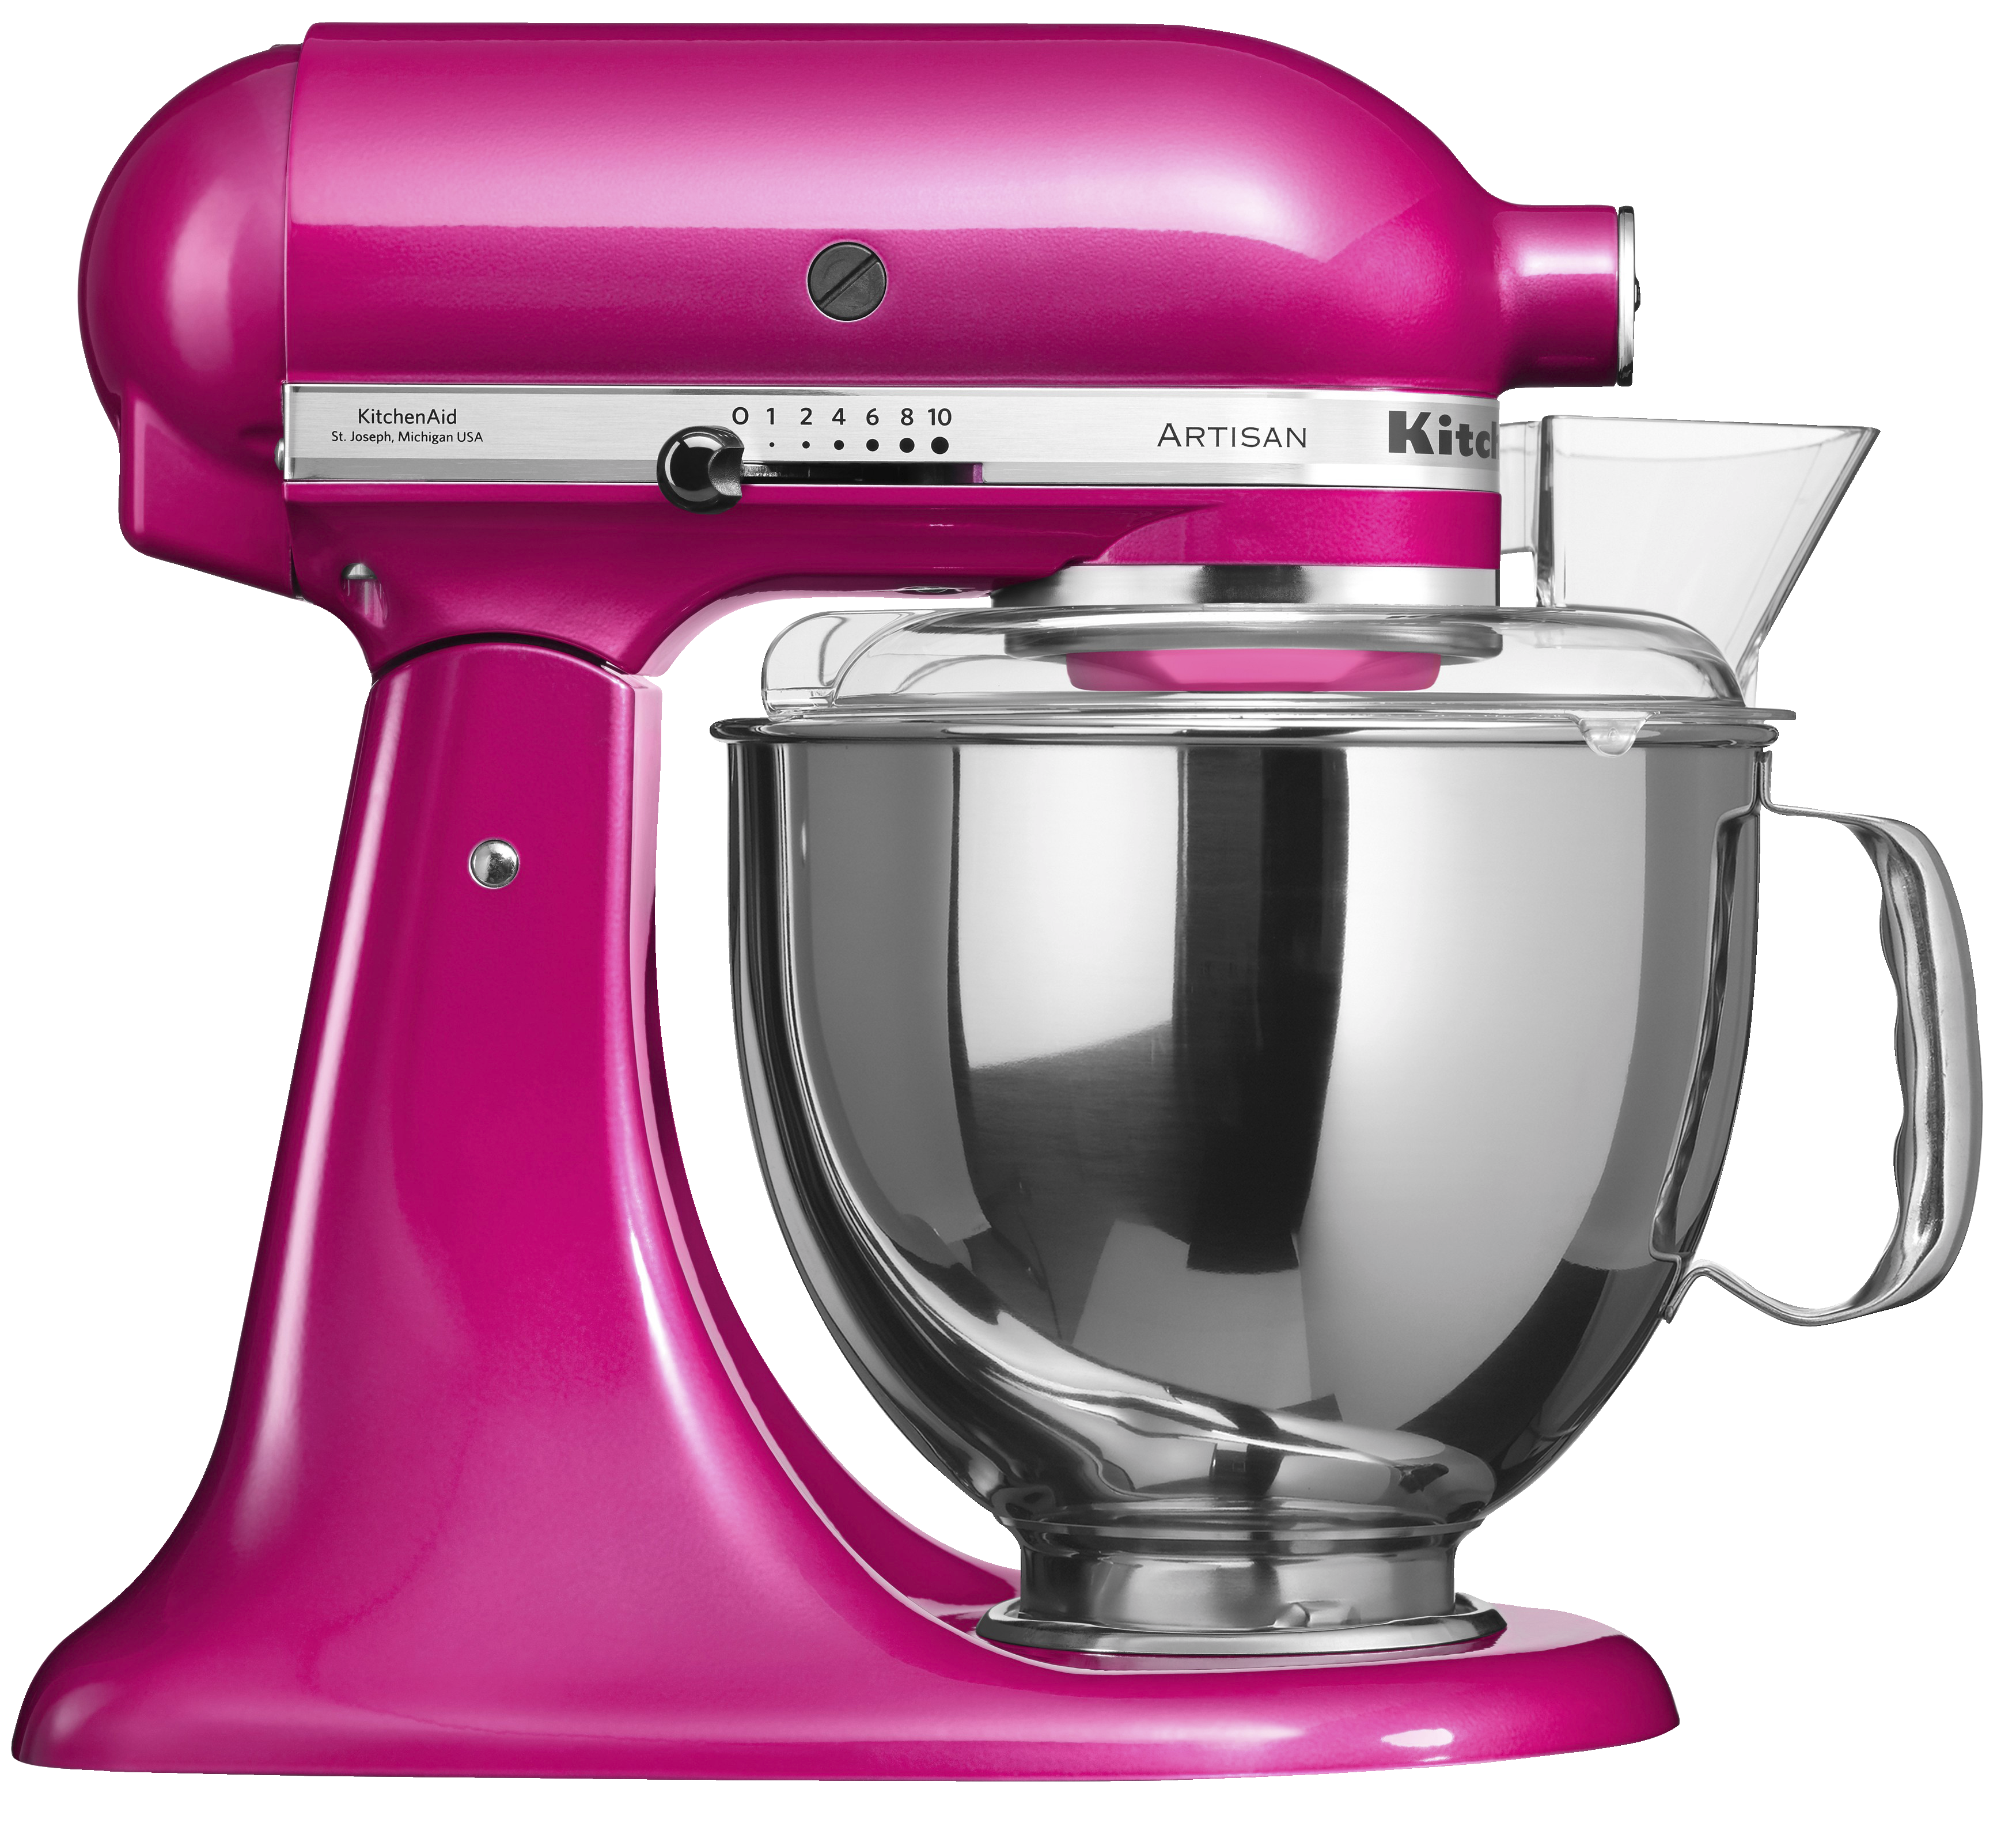 KitchenAid køkkenmaskine 5KSM150PSERI - pink - Køkkenudstyr ...